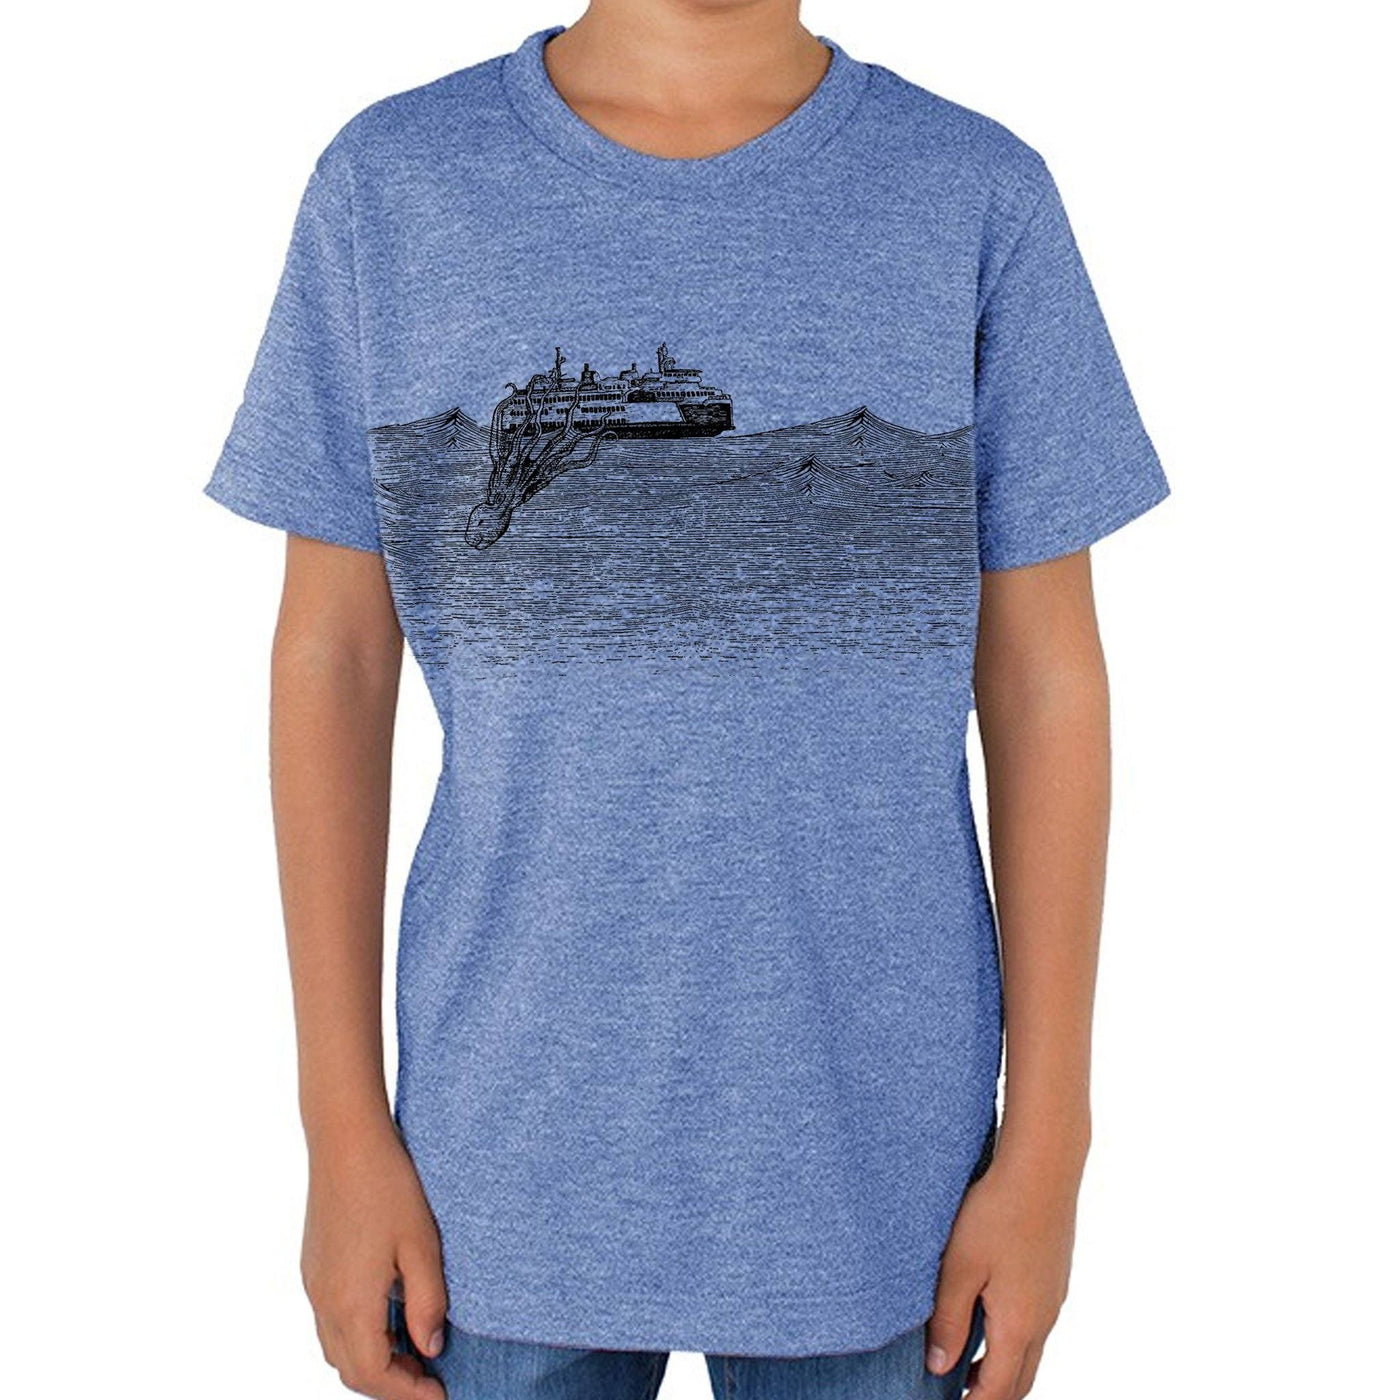 Kraken - Kids triblend t-shirt (L.blue) Shirt Printshop Northwest 